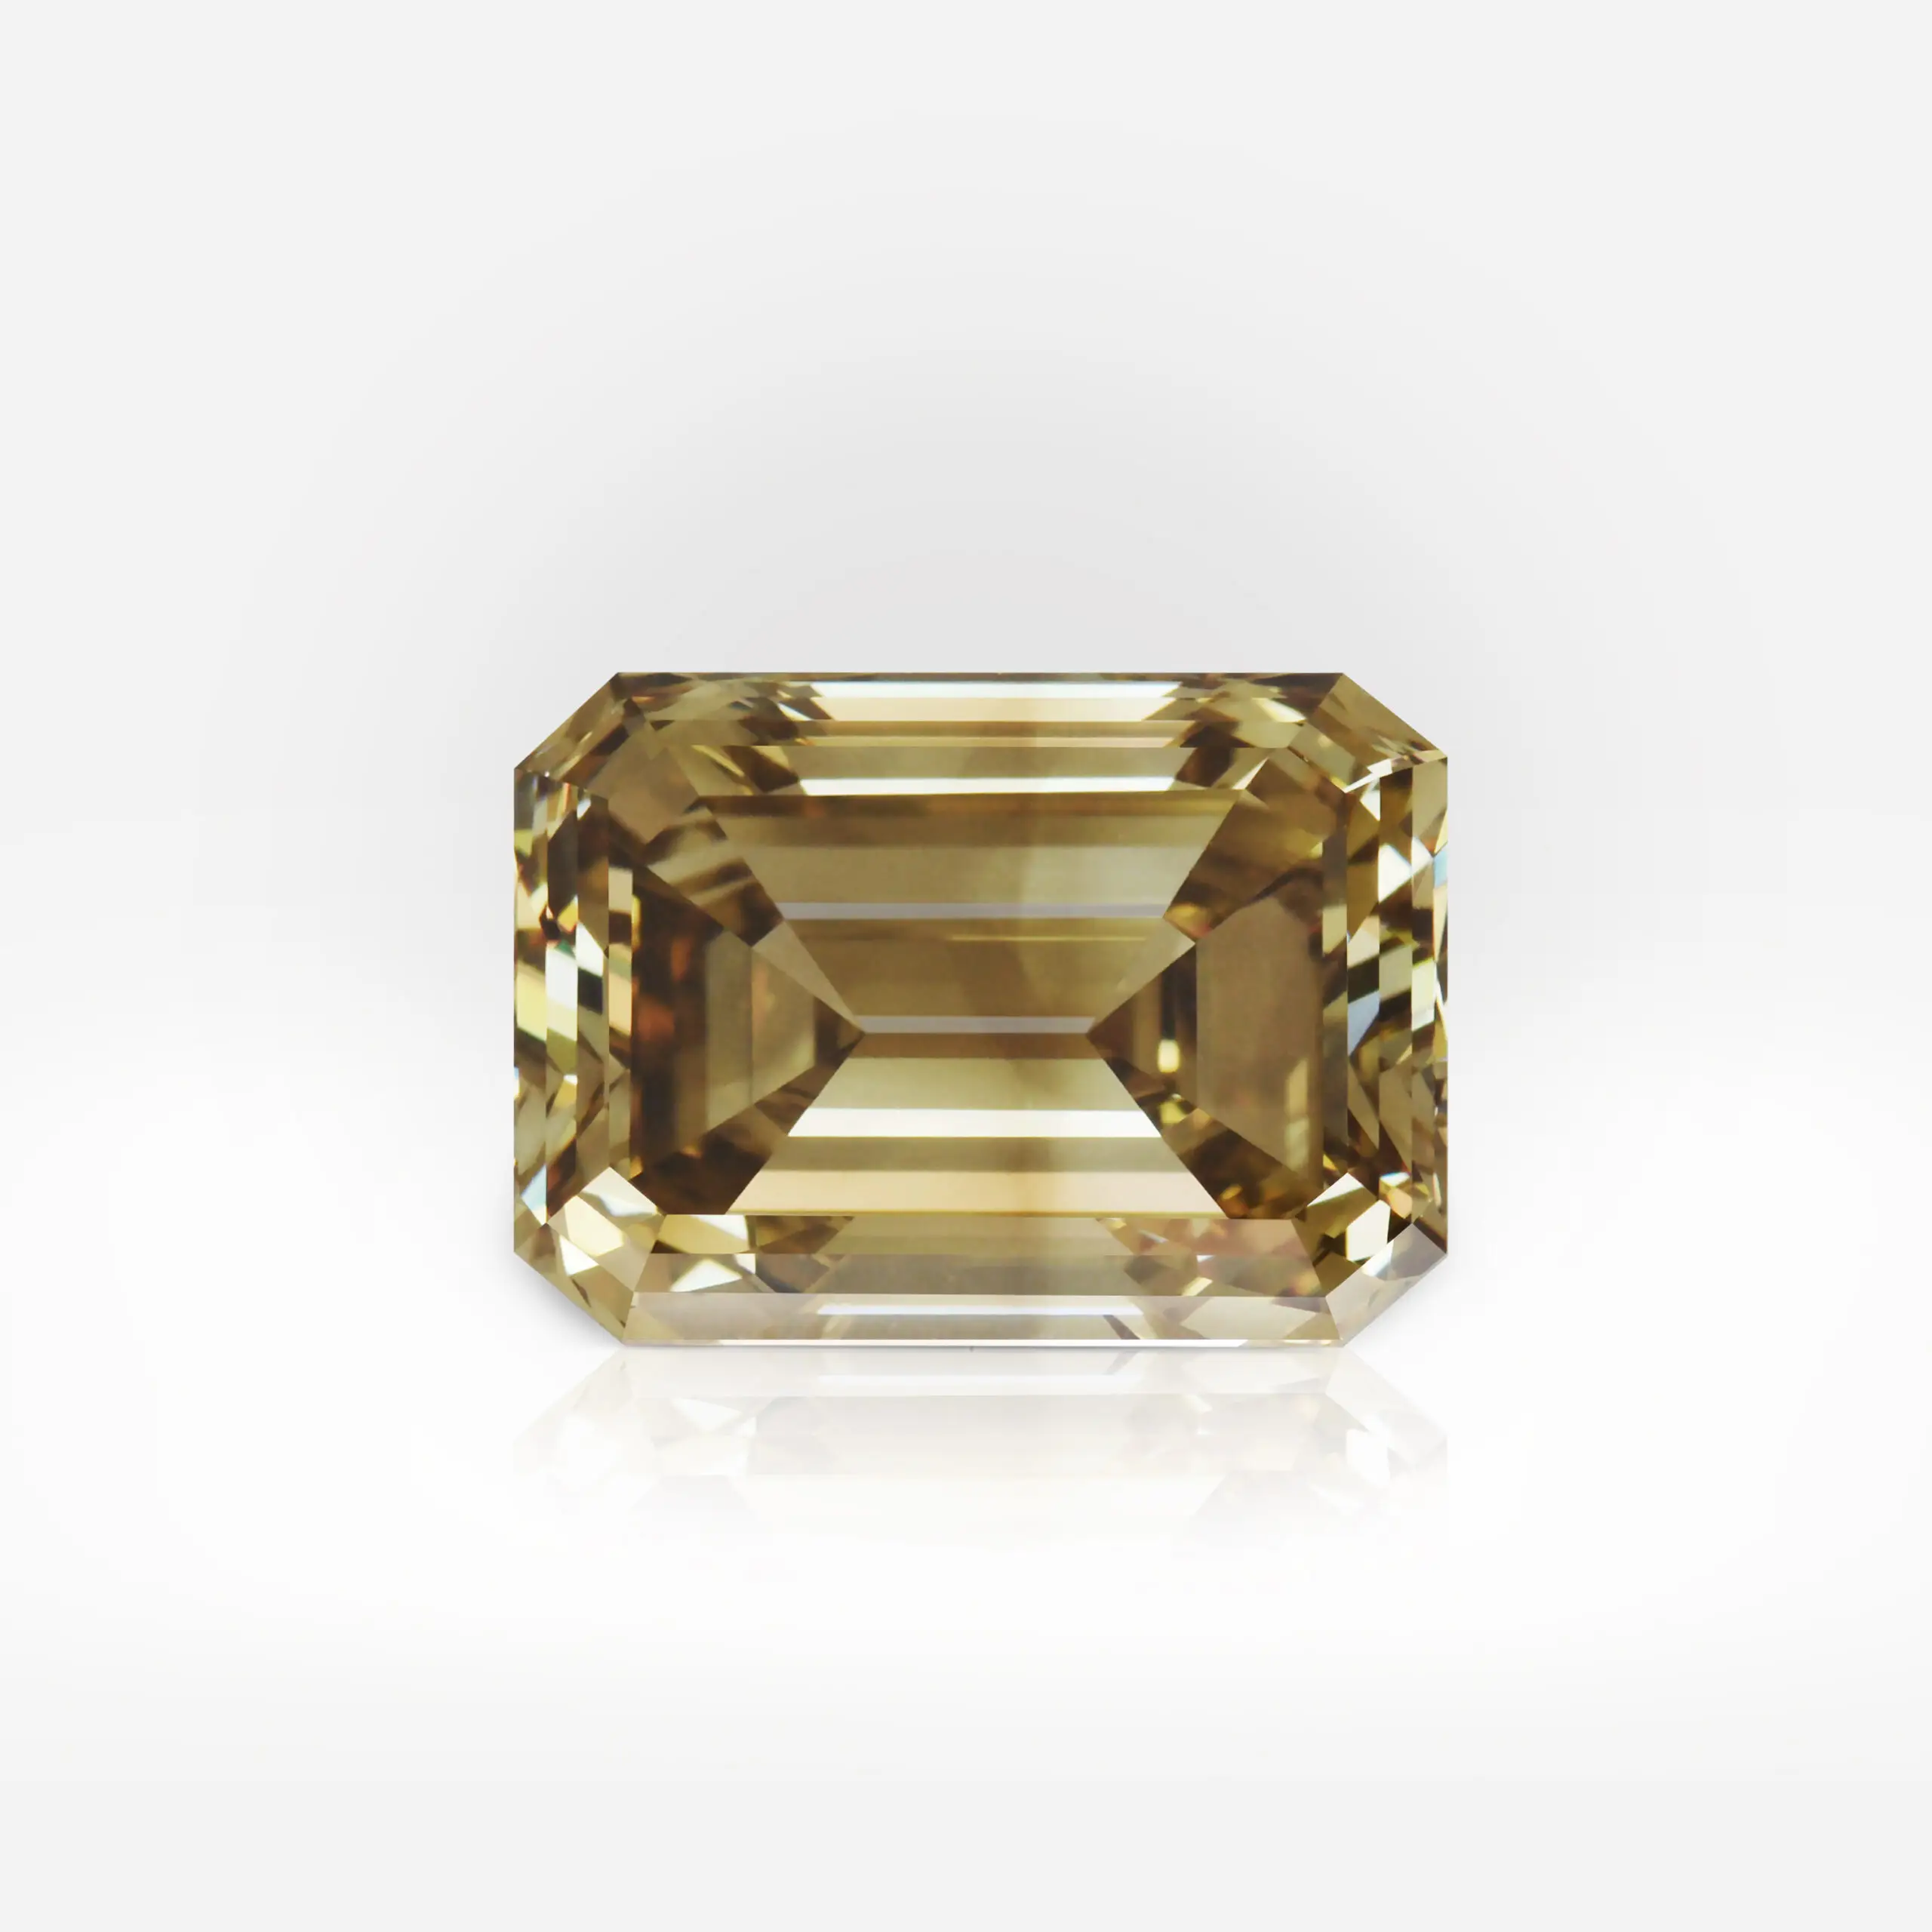 10.07 carat Fancy Deep Brownish Greenish Yellow VS1 Emerald Shape Diamond GIA - picture 1